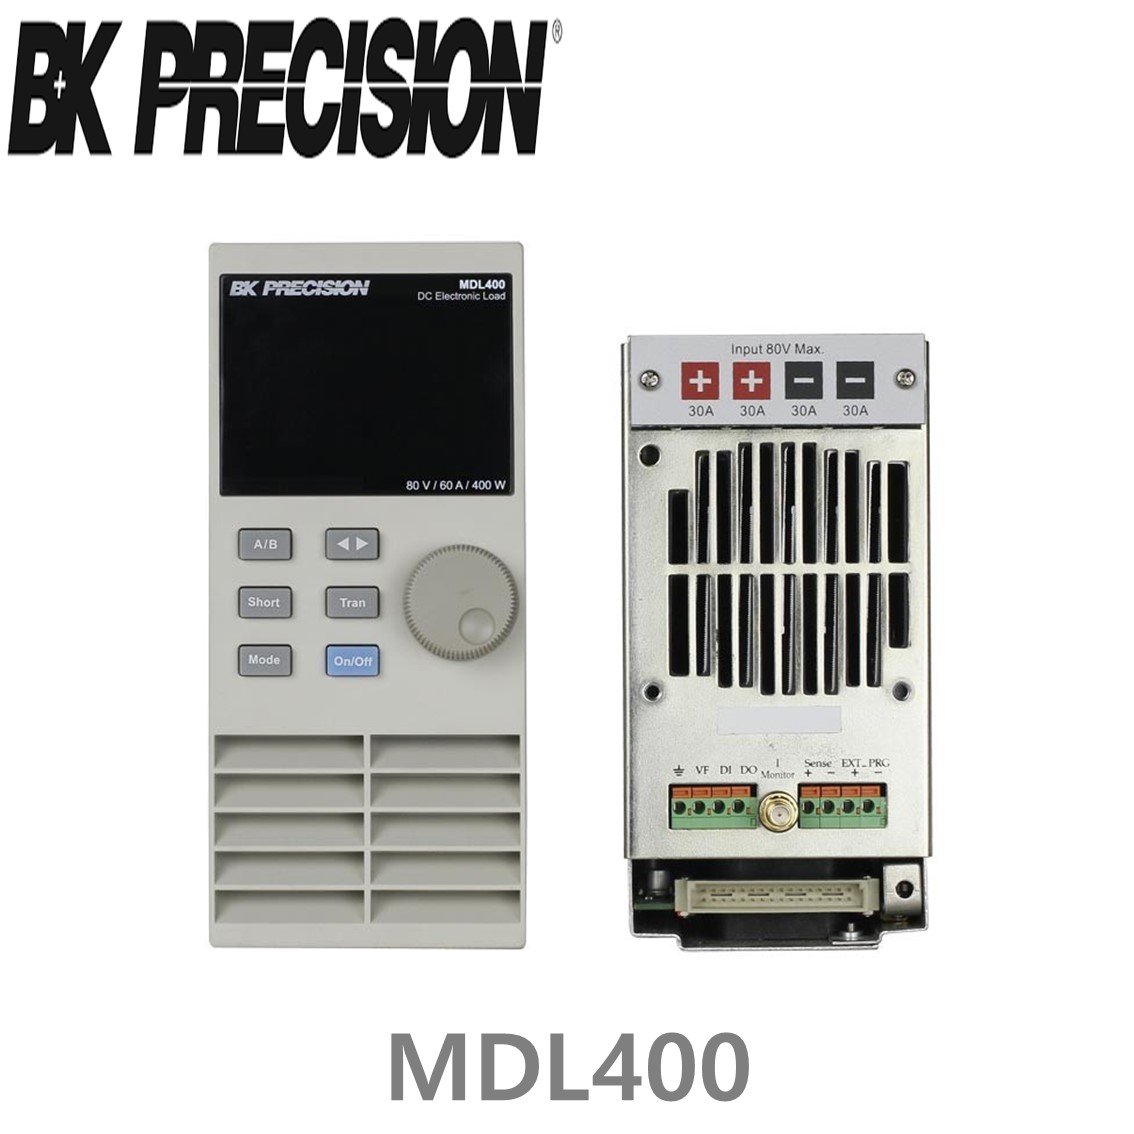 [ BK Precision ] MDL400  DC전자로드모듈 80V/60A/400W